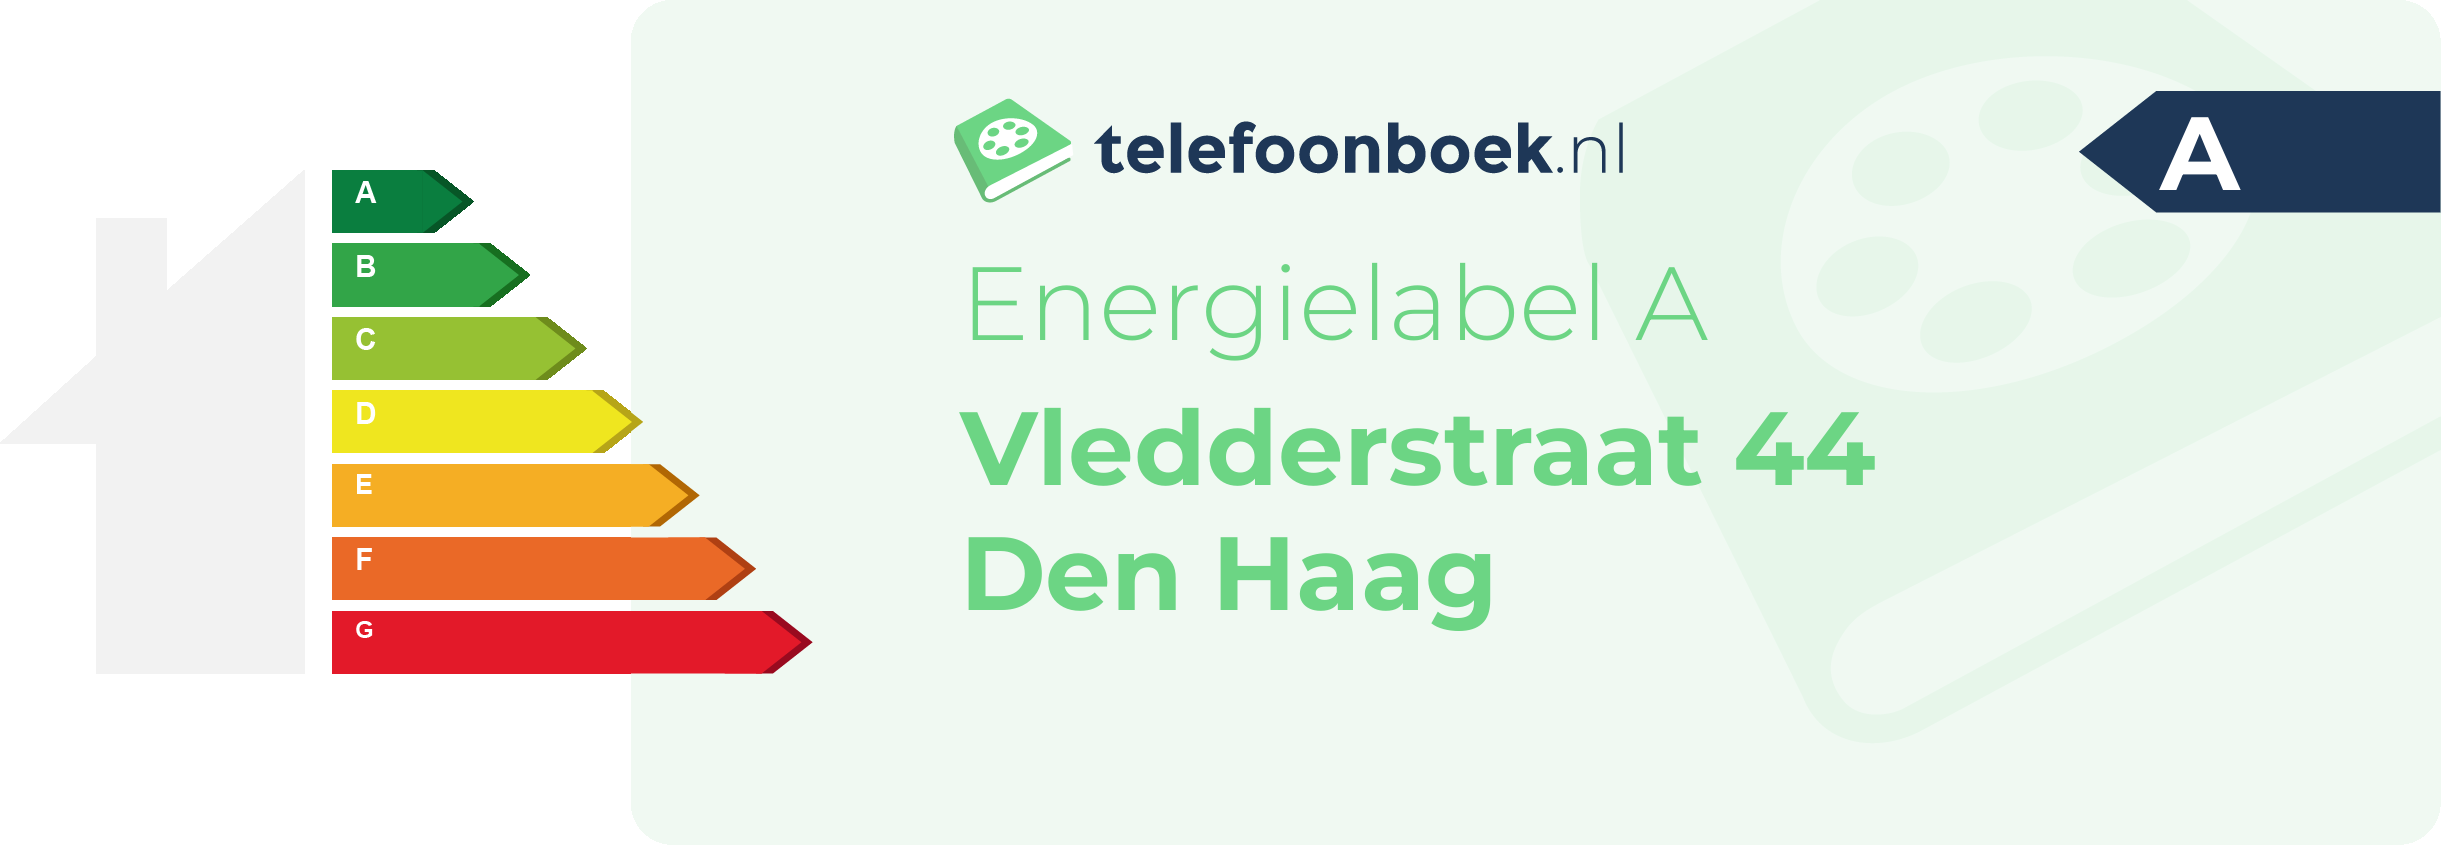 Energielabel Vledderstraat 44 Den Haag